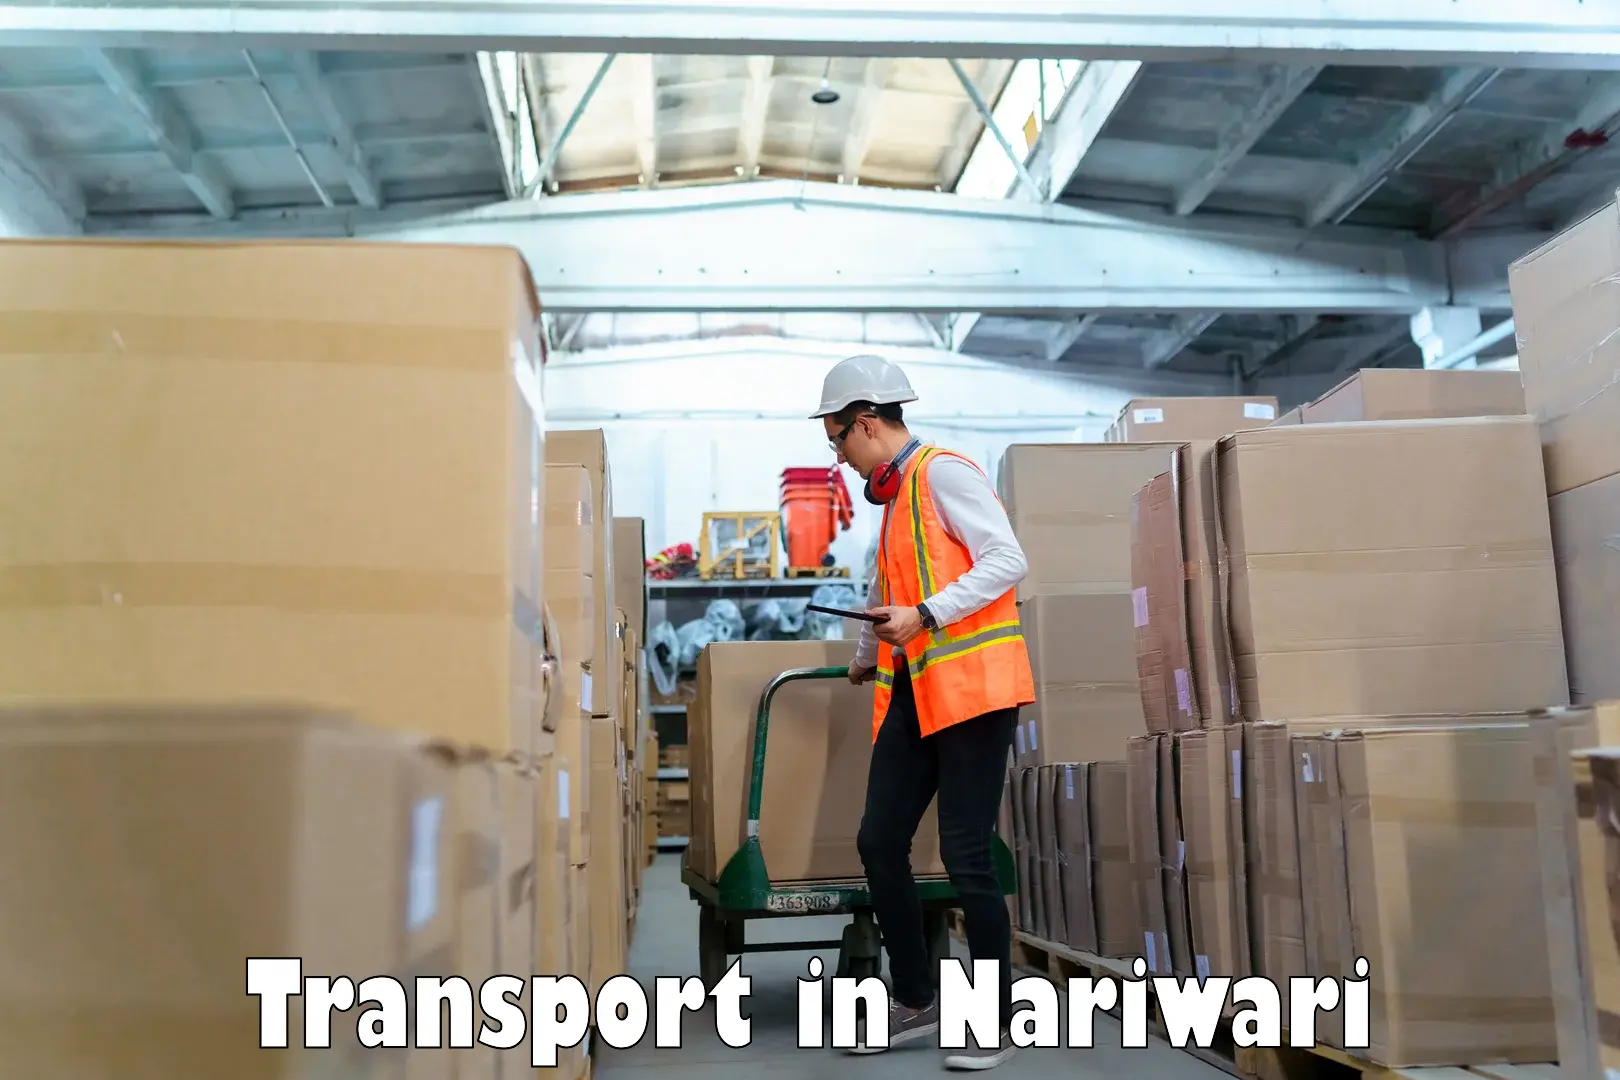 Road transport online services in Nariwari